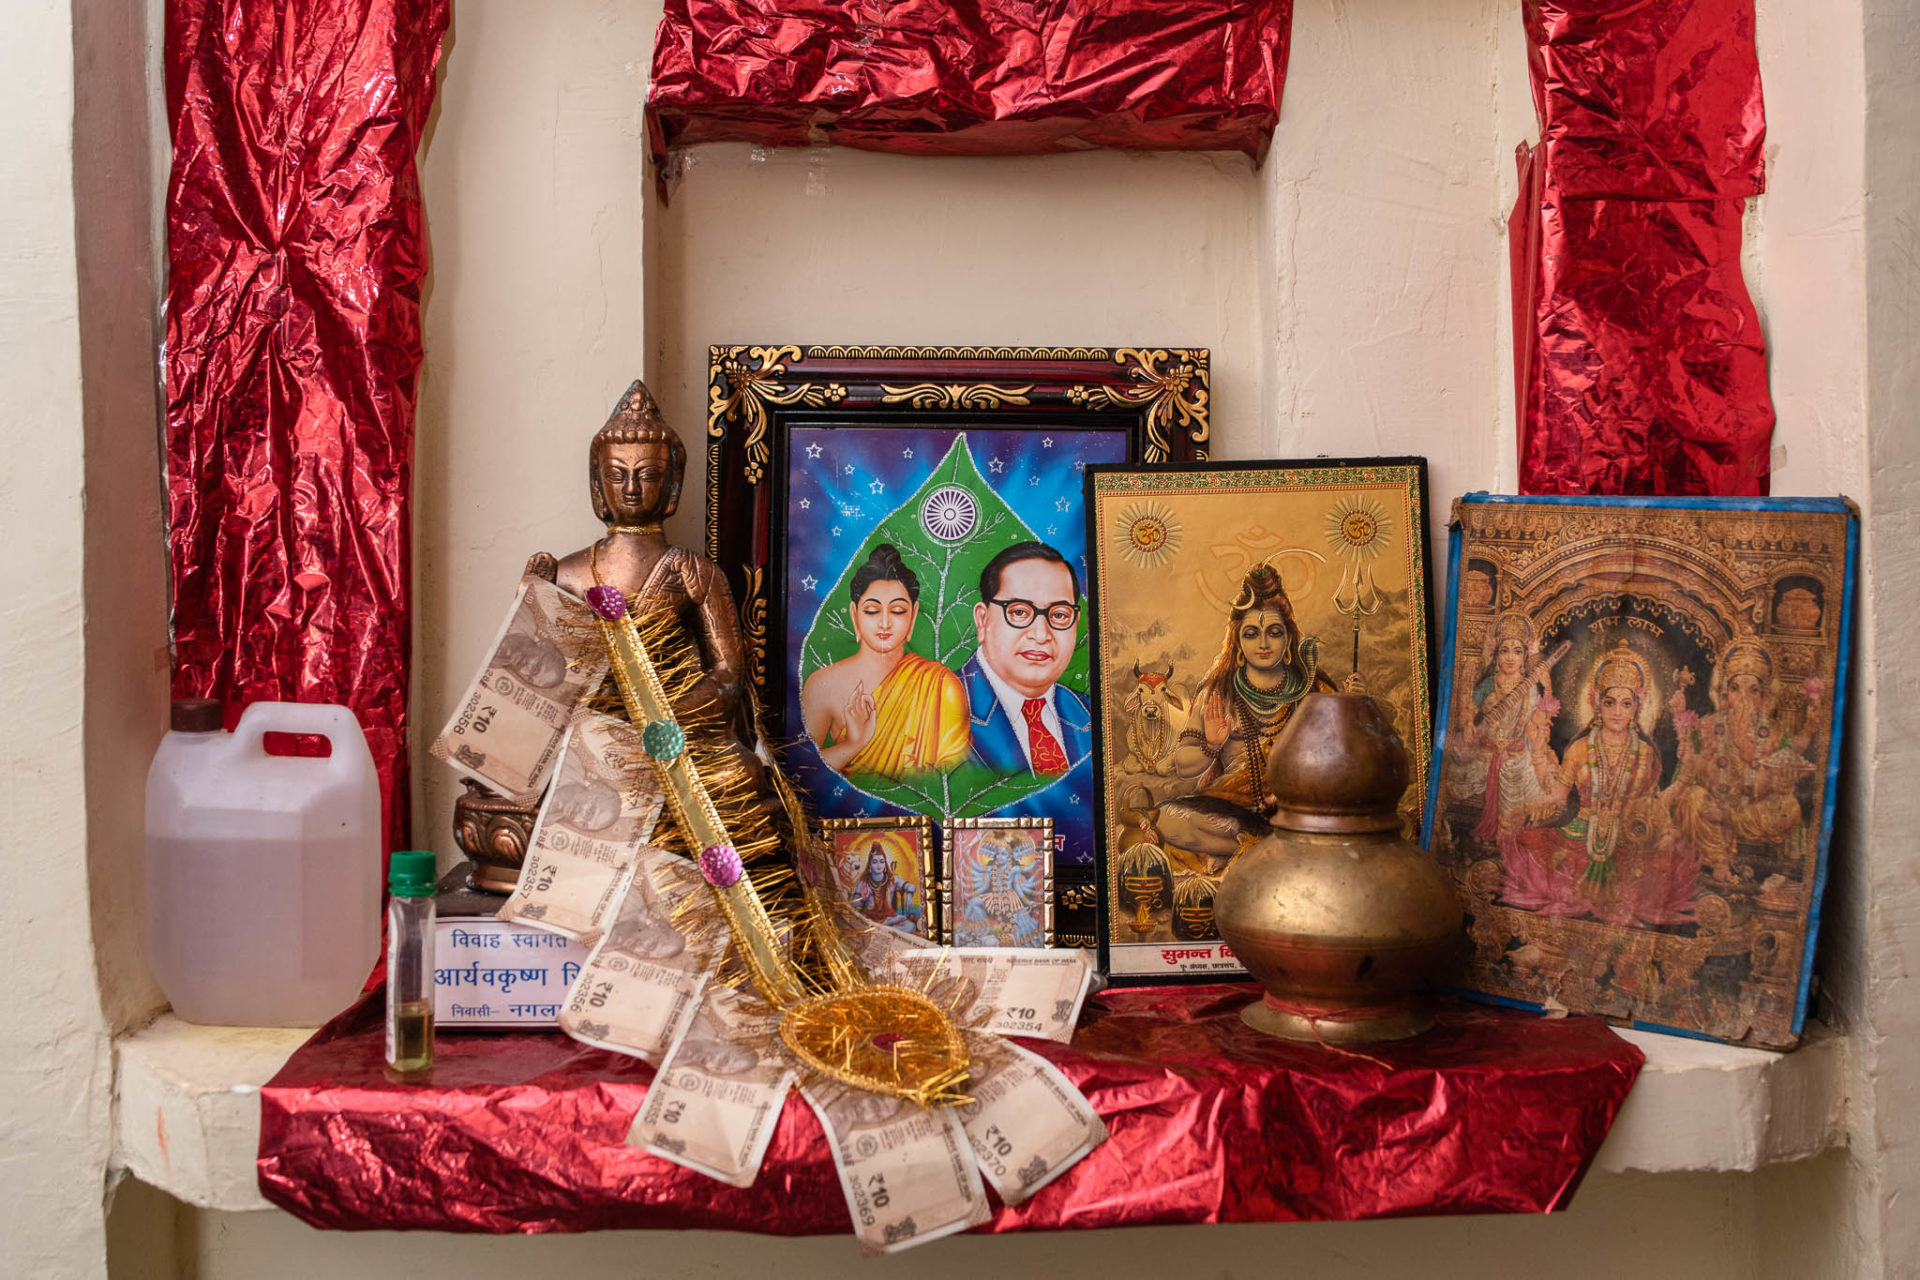 Dr. Babasaheb Ambedkar's portrait amongst other Indian Gods in S